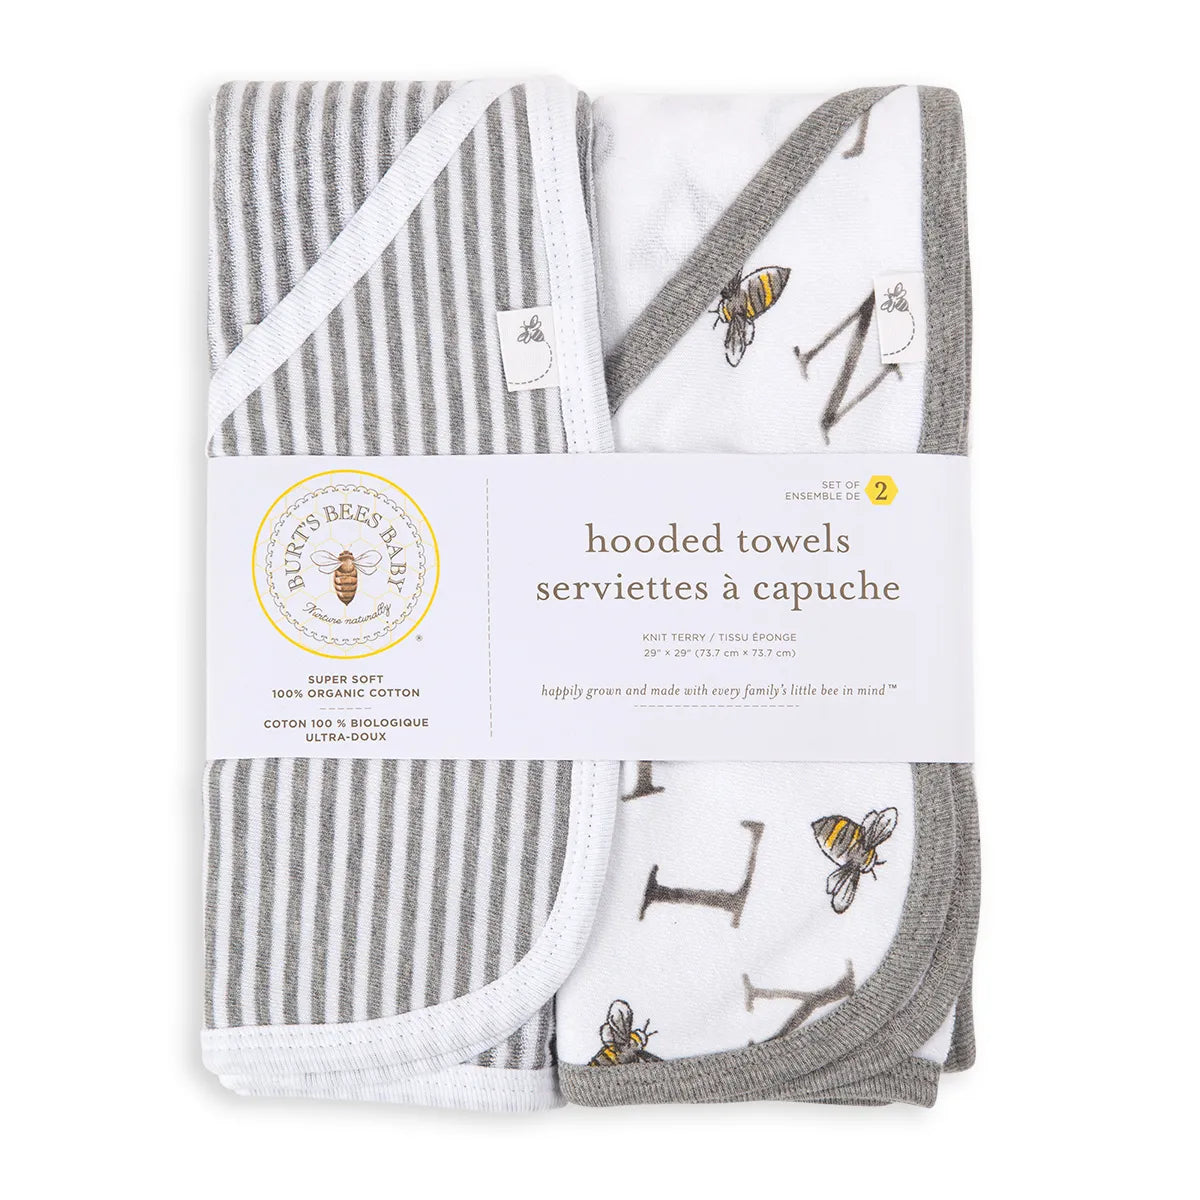 Burts Bees Baby Organic Cotton Wash Cloths 3-pack (Little Ducks